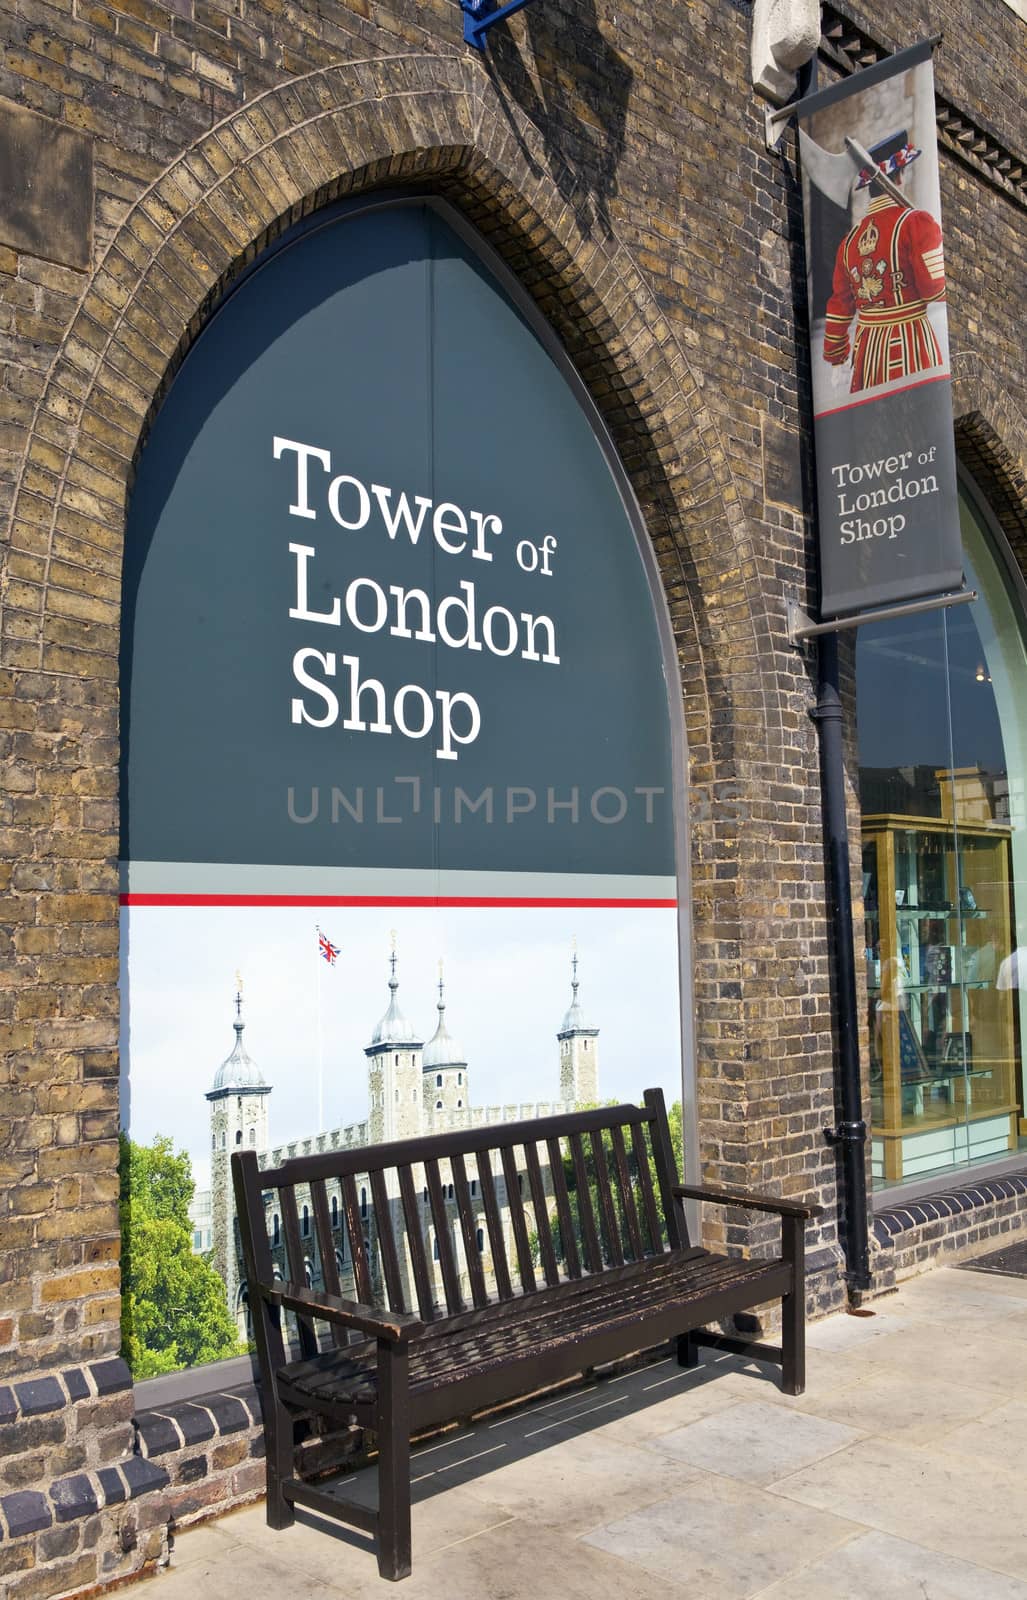 Tower of London Shop by chrisdorney